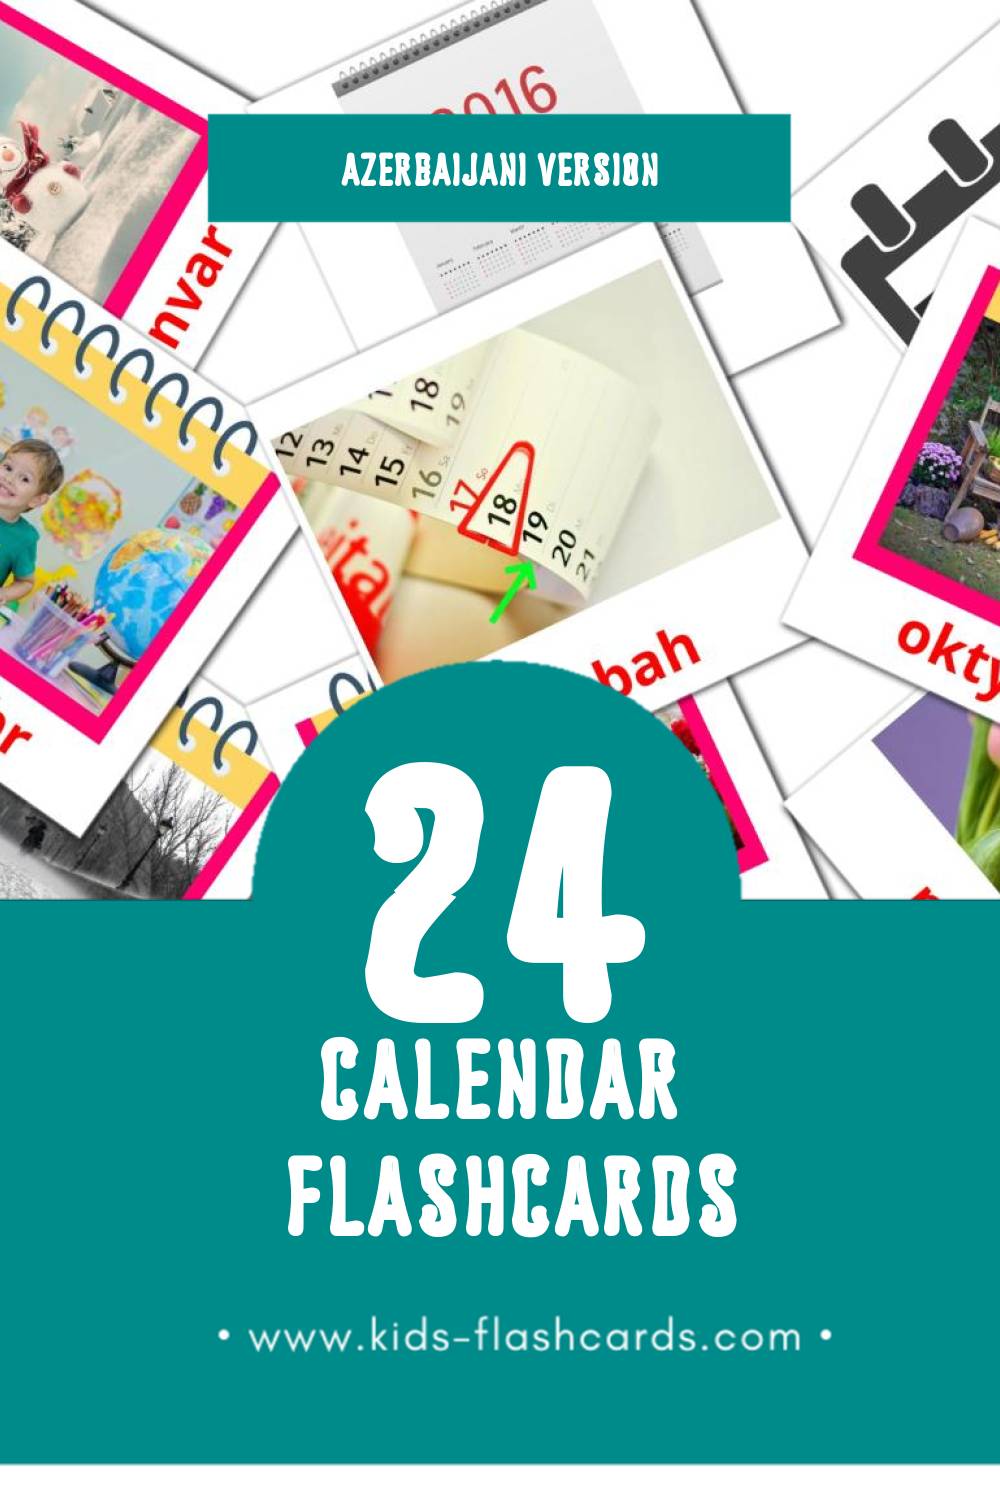 Visual Təqvim Flashcards for Toddlers (12 cards in Azerbaijani)